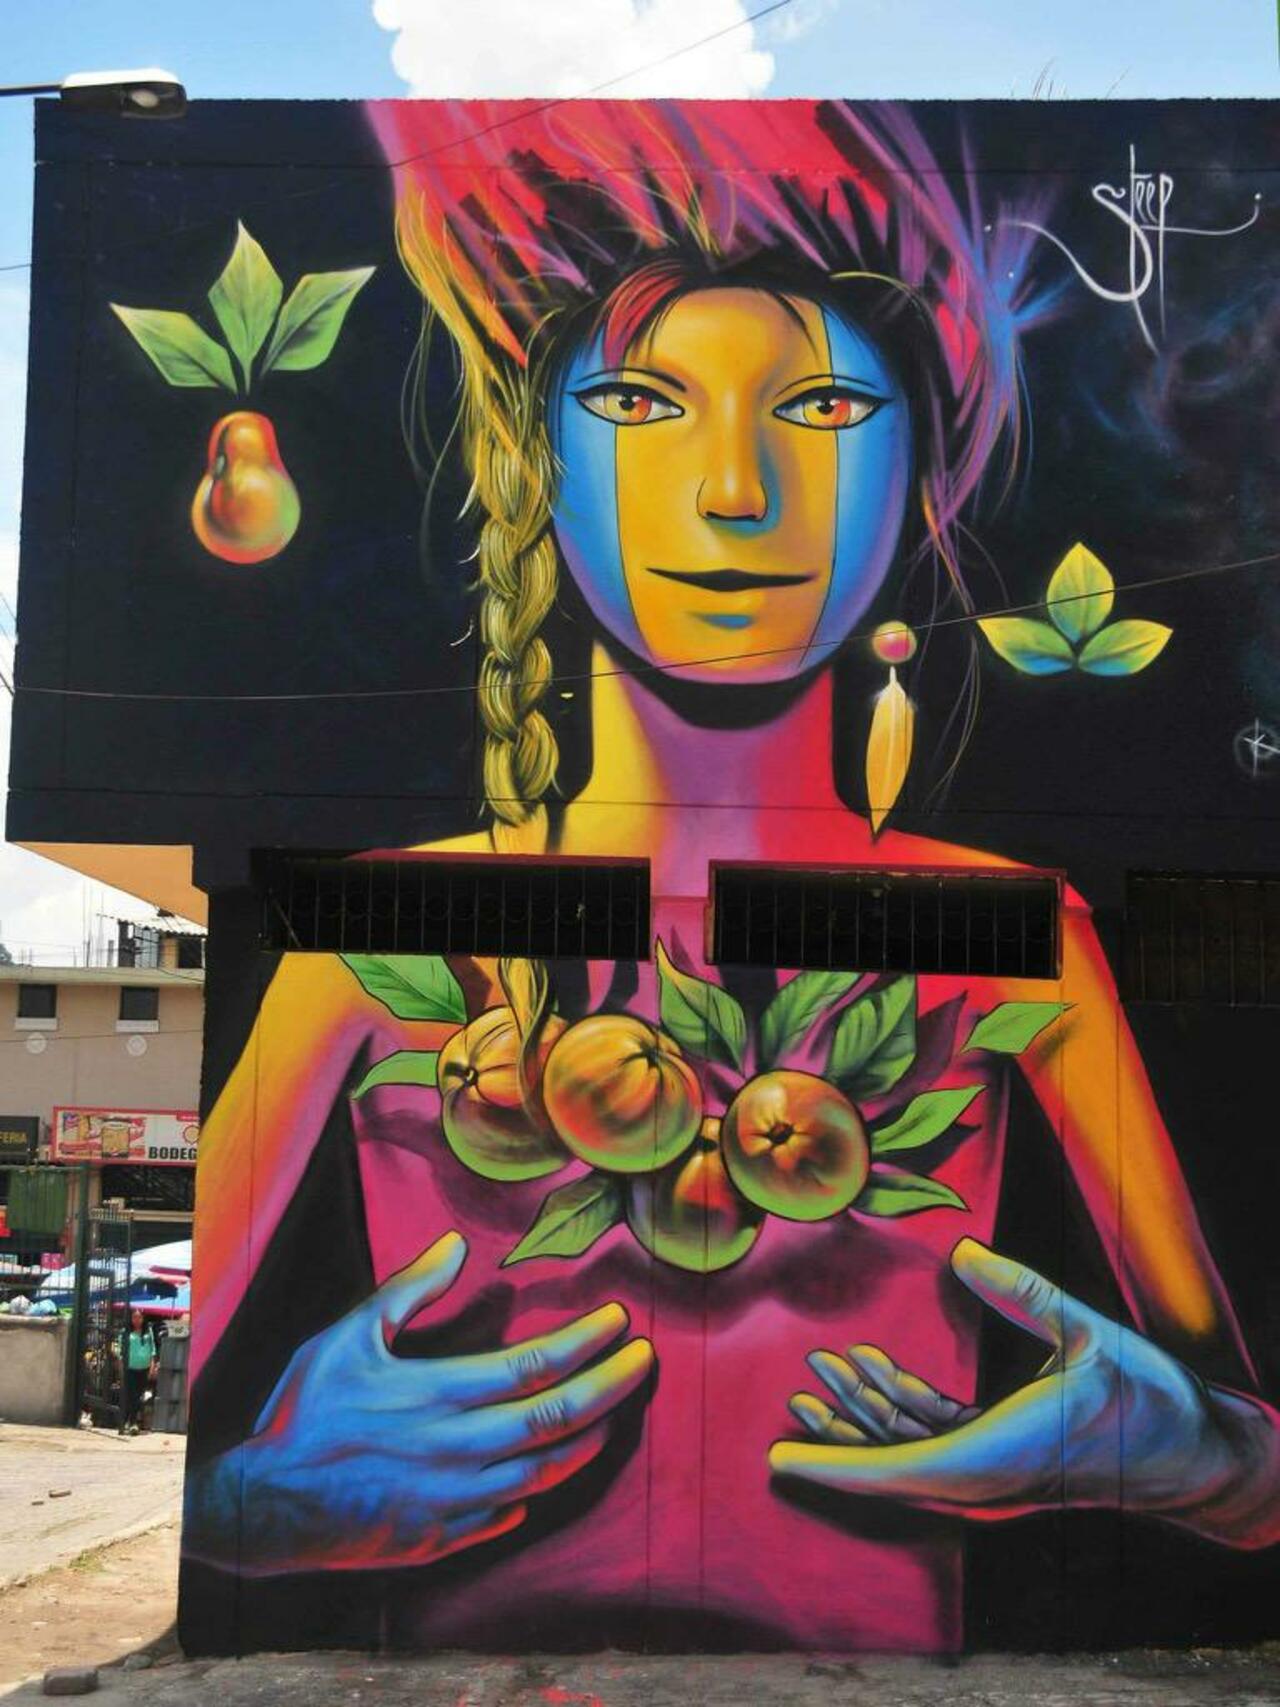 Street Art by Steep

#art #graffiti #mural #streetart http://t.co/geLfOtbr4c